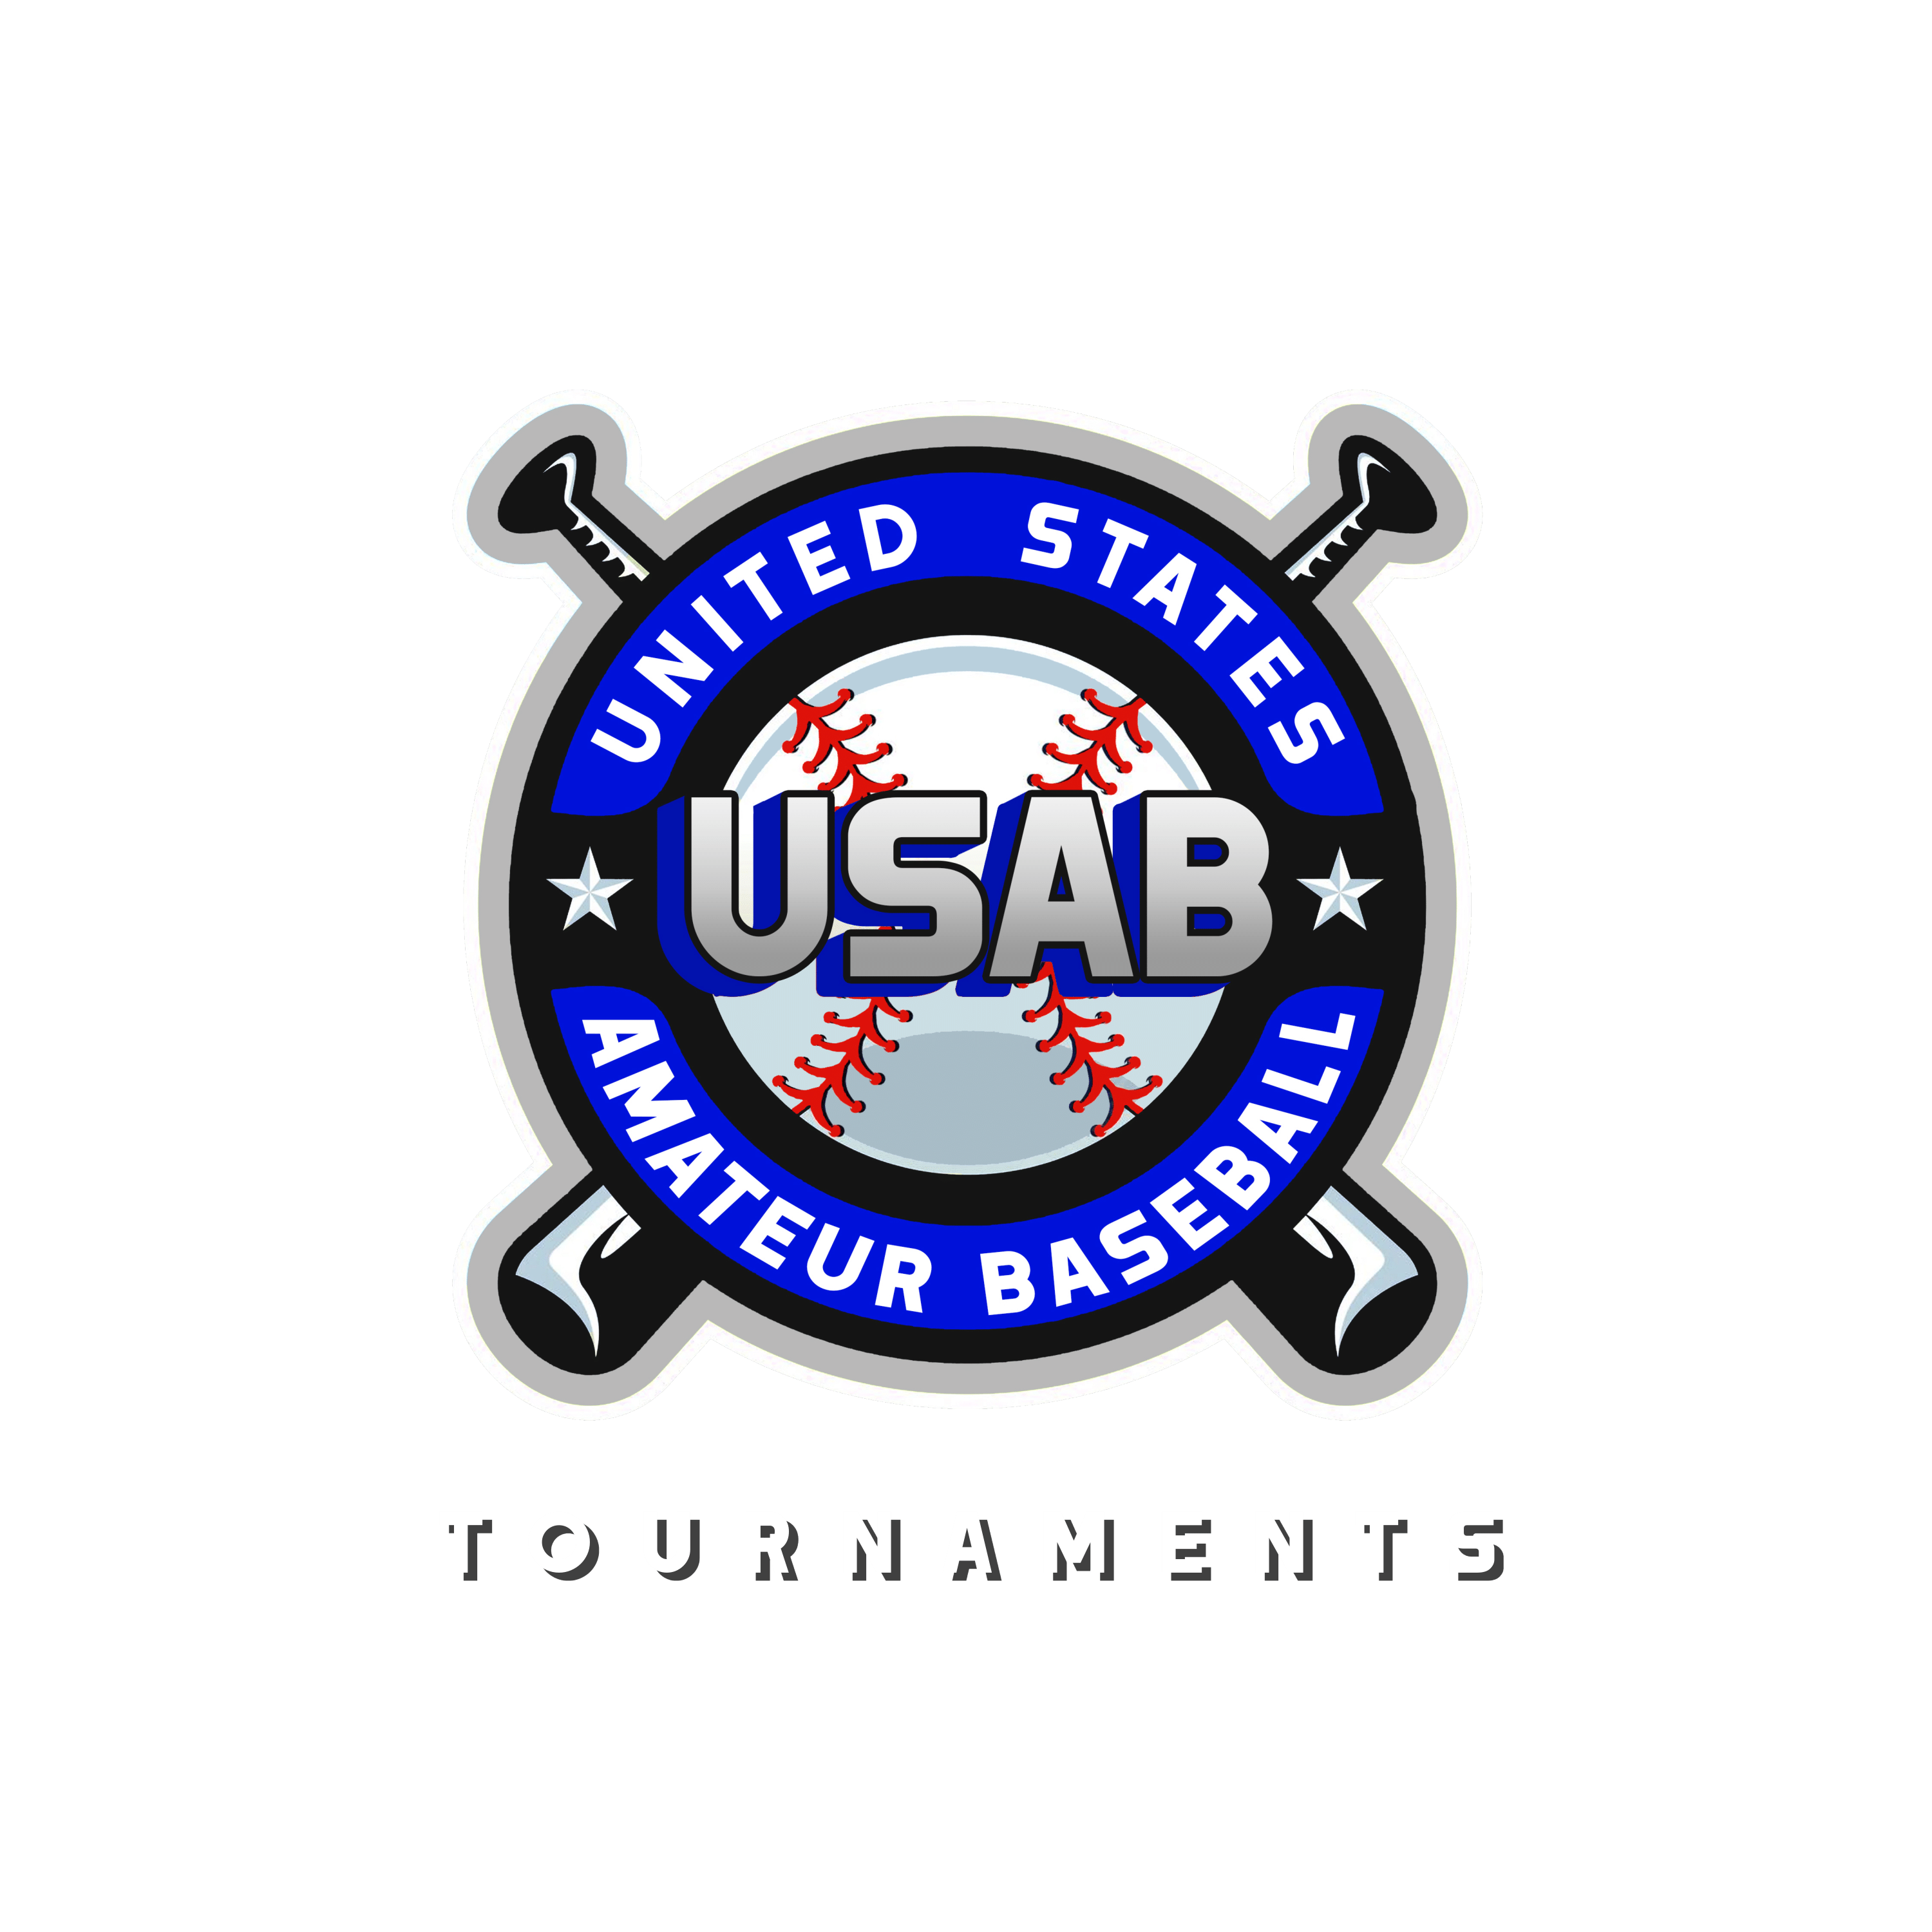 USAB SILVER SLUGGER WOOD BAT TOURNAMENT **FREE JERSEYS FOR THE WINNERS Logo